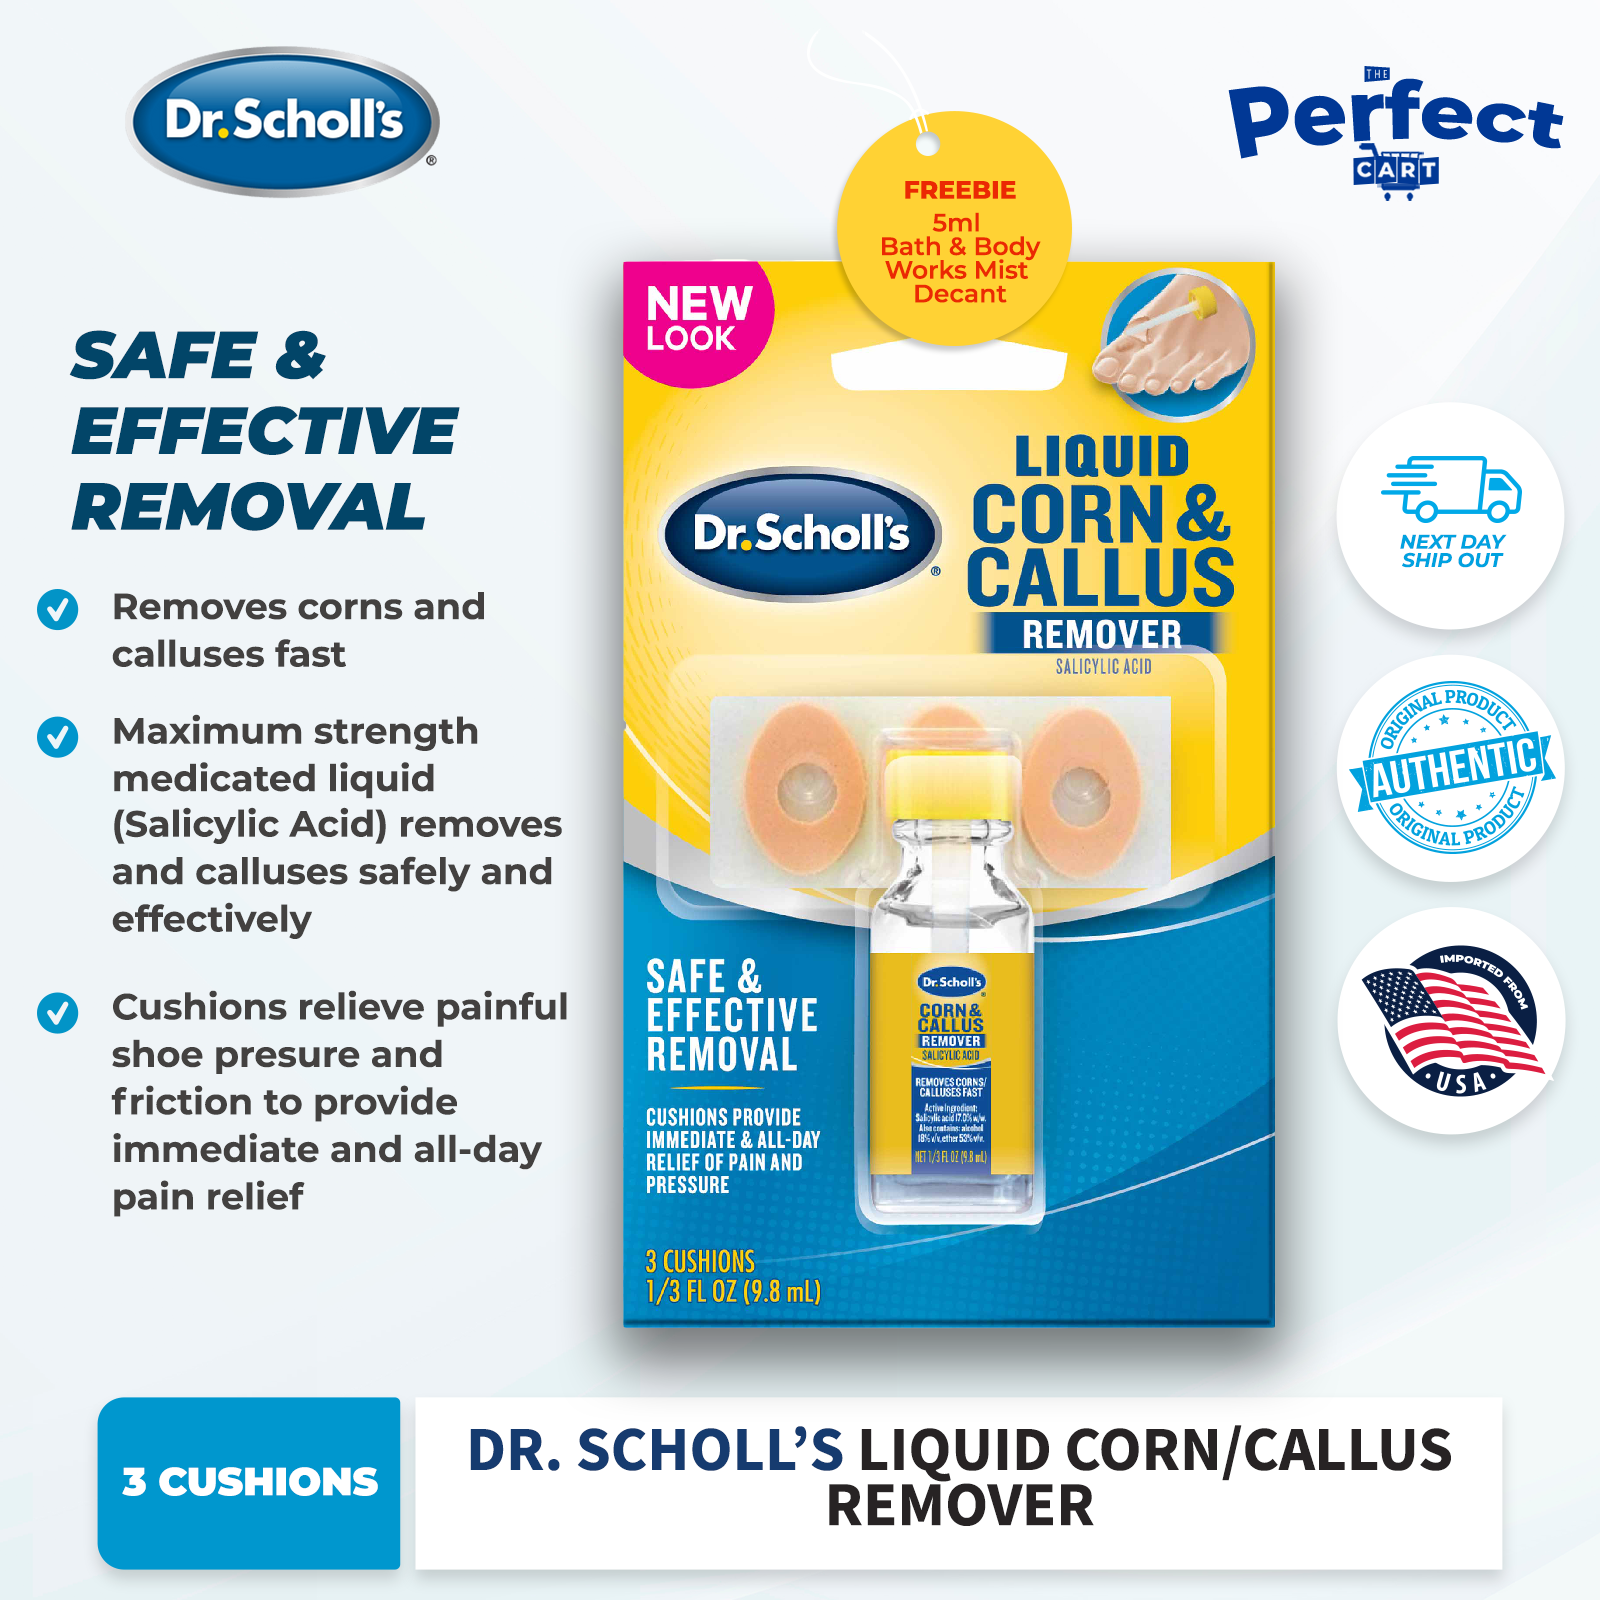 Dr. Scholl's Liquid Corn & Callus Remover 9.8 ml